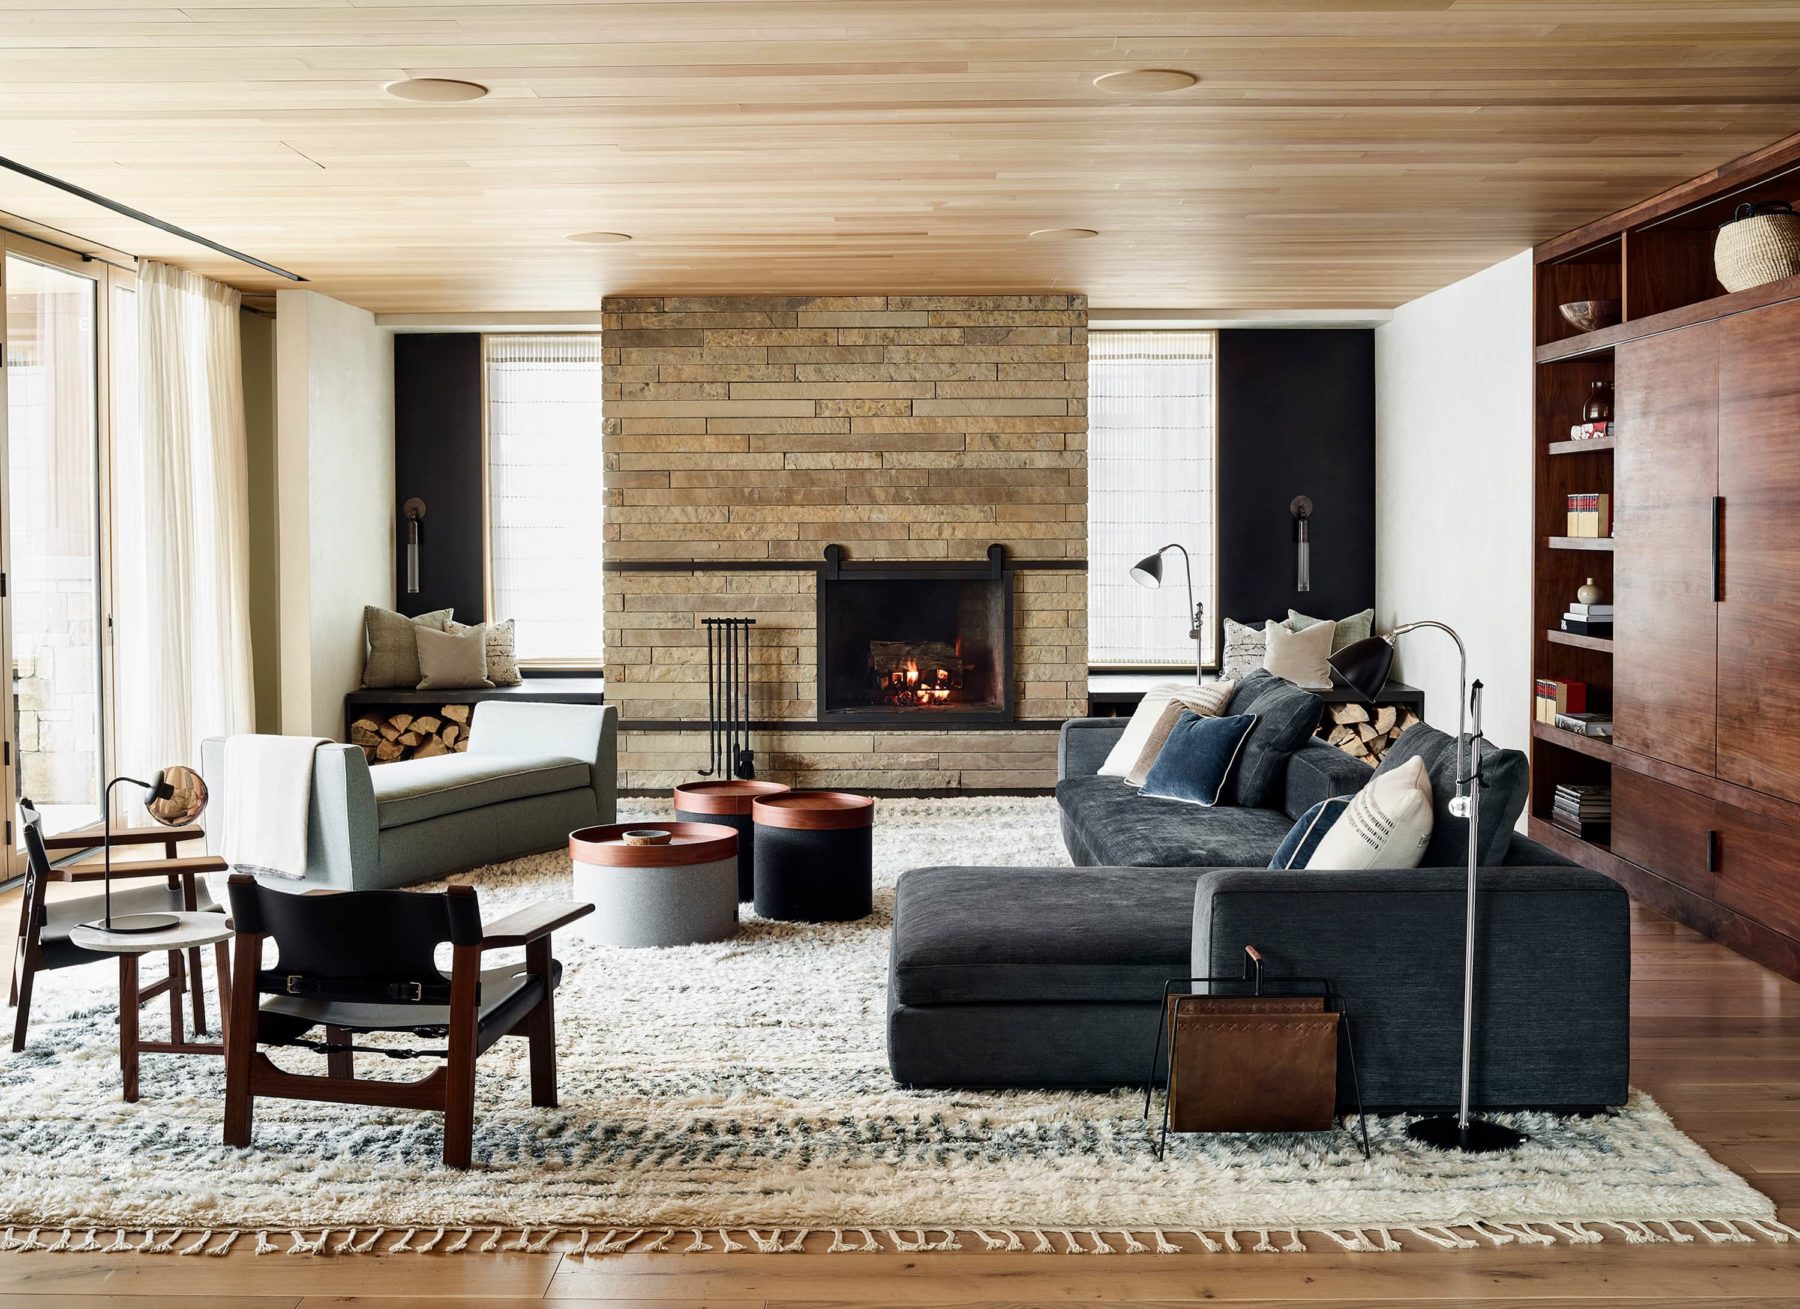 Suite 401 living room - Caldera House